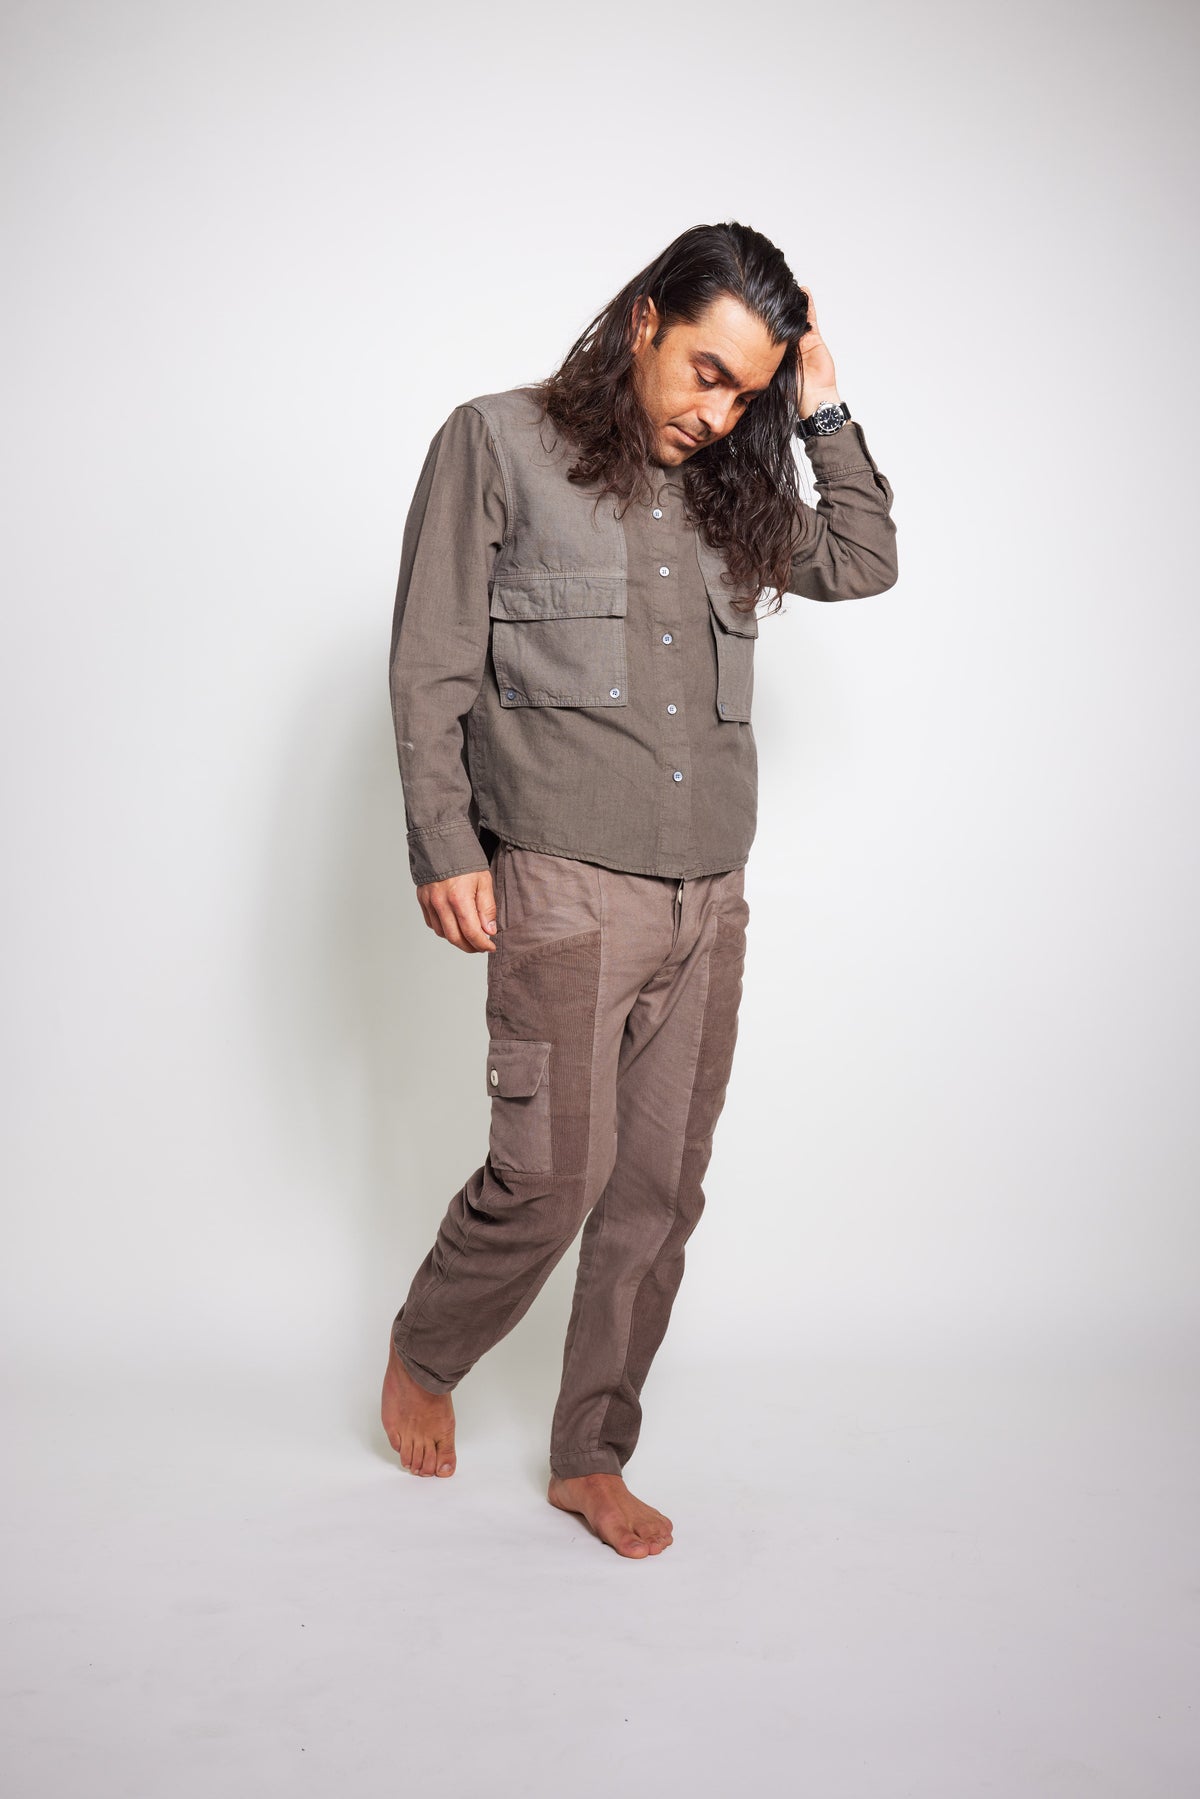 Fear of God 'Sixth Collection' Nylon Cargo Snap Button Pants - Men's,  Black, L